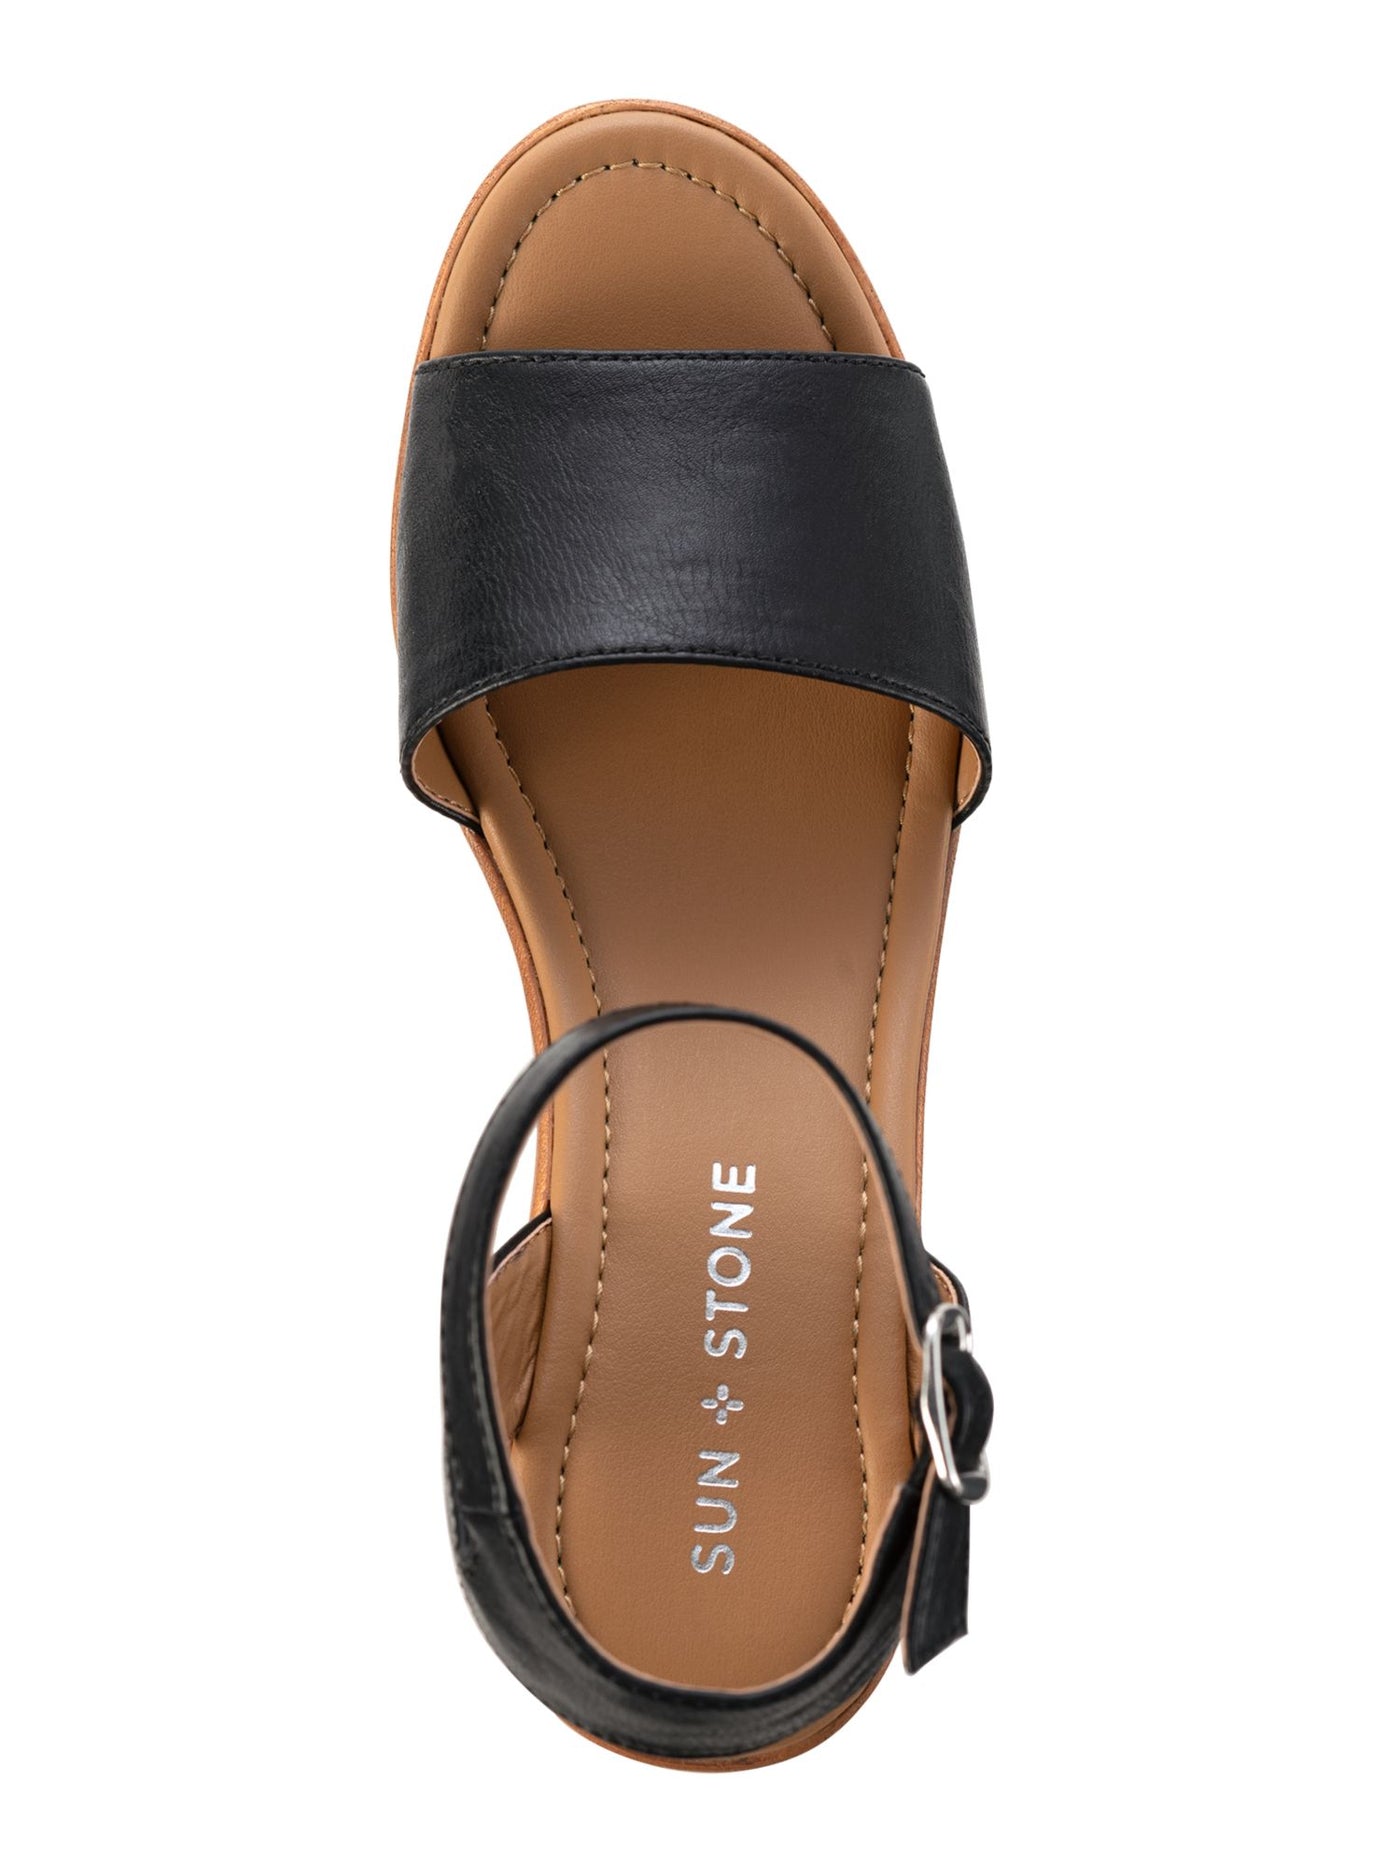 SUN STONE Womens Black 1/2" Platform Strappy Wood-Like Ankle Strap Adjustable Audreey Round Toe Wedge Buckle Dress Slingback Sandal 7.5 M